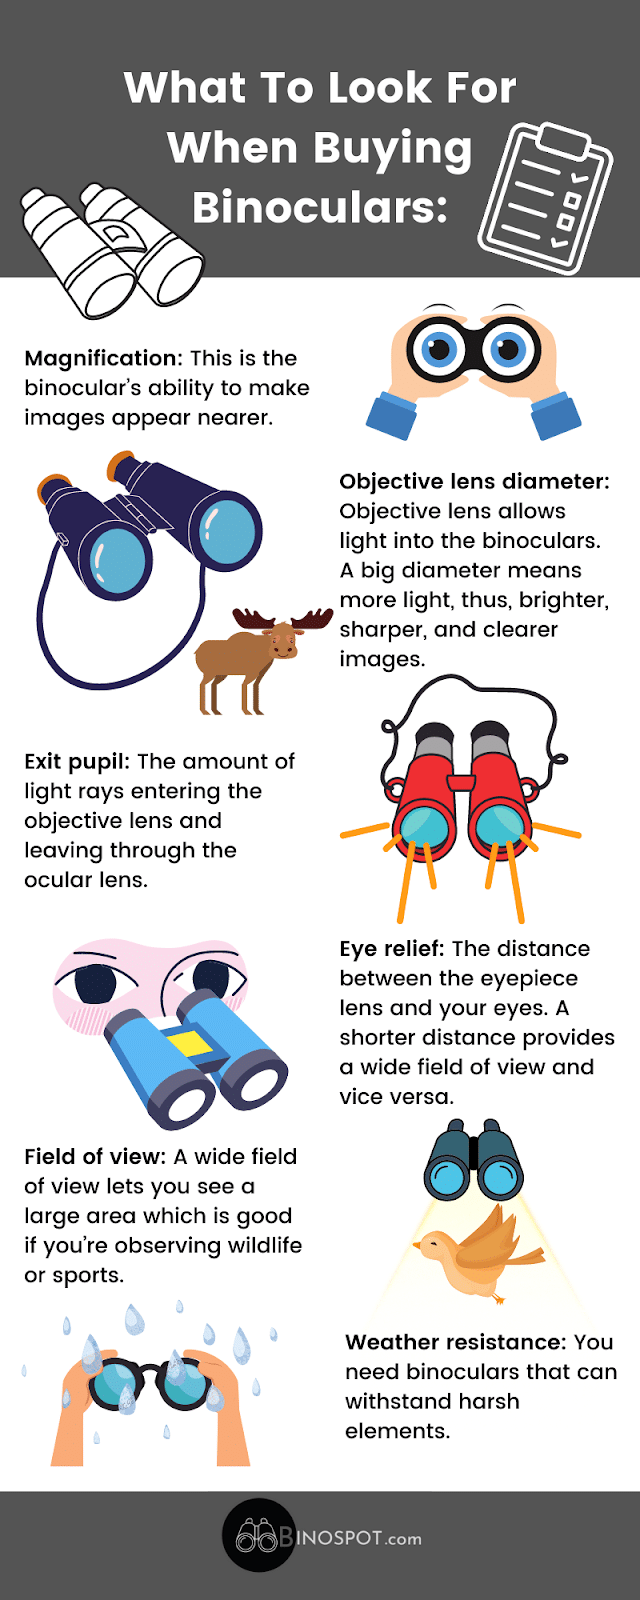 Binoculars Buying Guide infographic